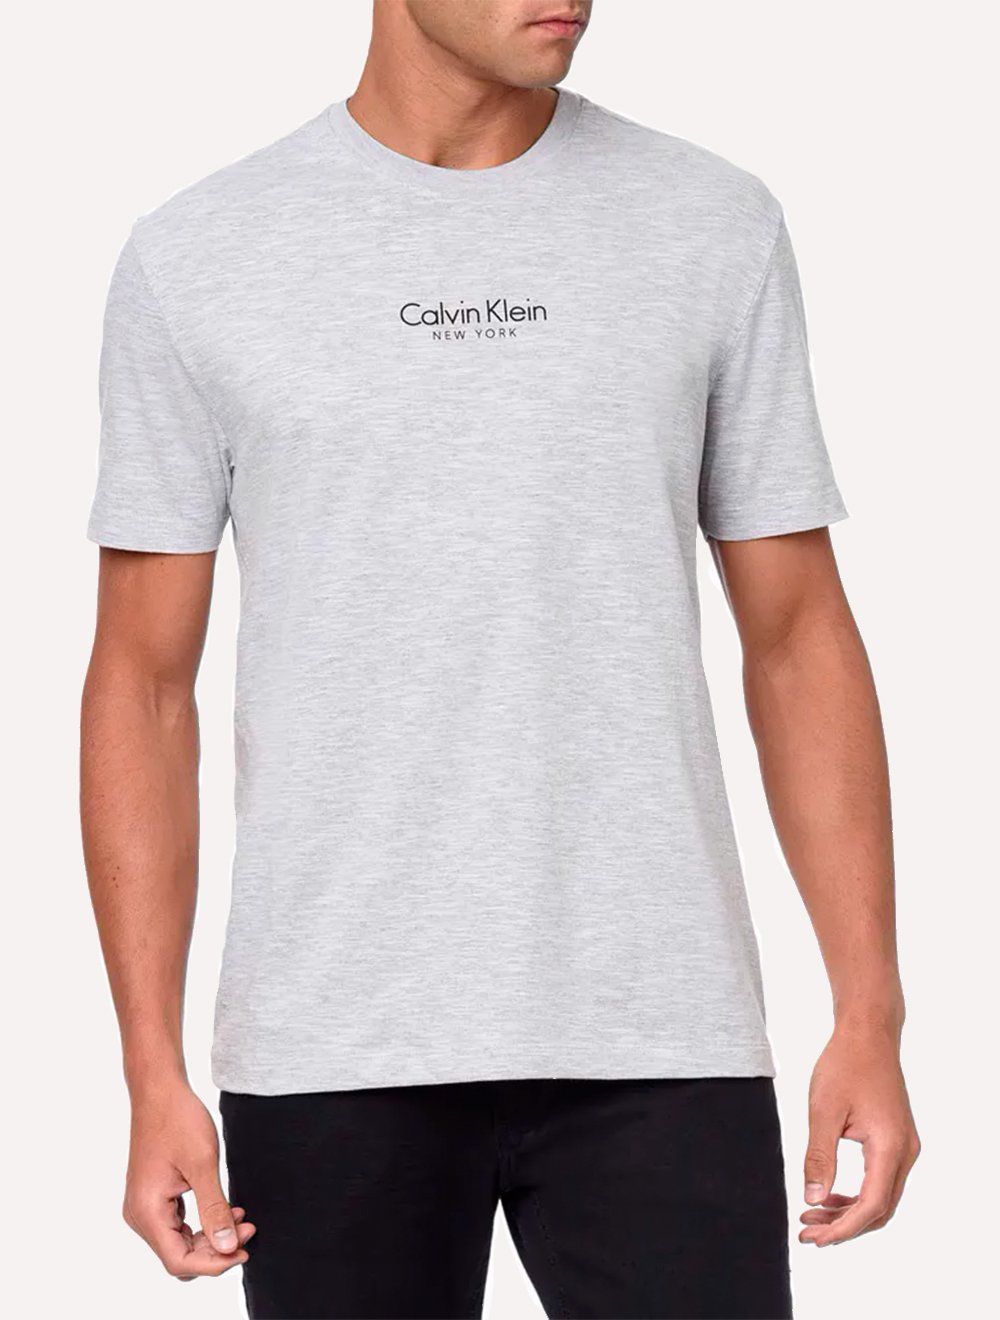 Camiseta Calvin Klein Masculina Flame CK New York Cinza Mescla